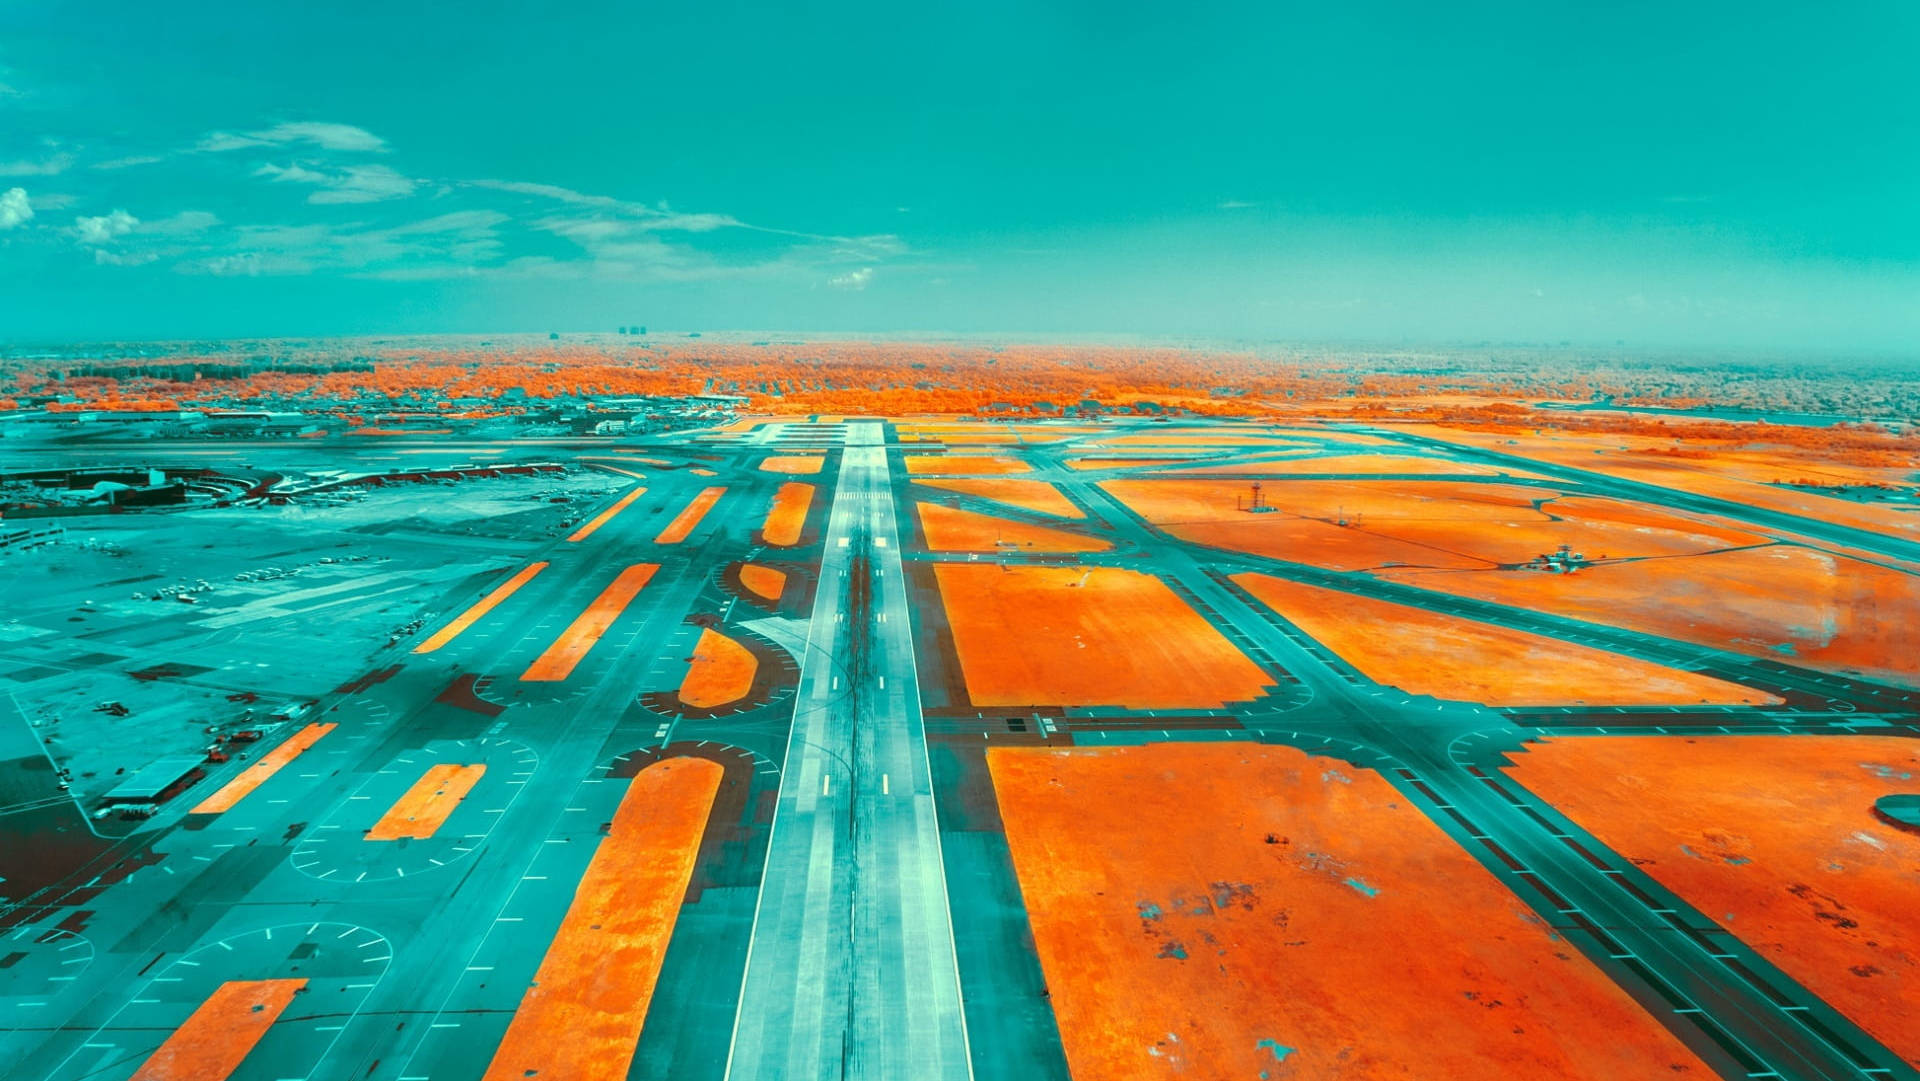 Teal And Orange Airport Runway